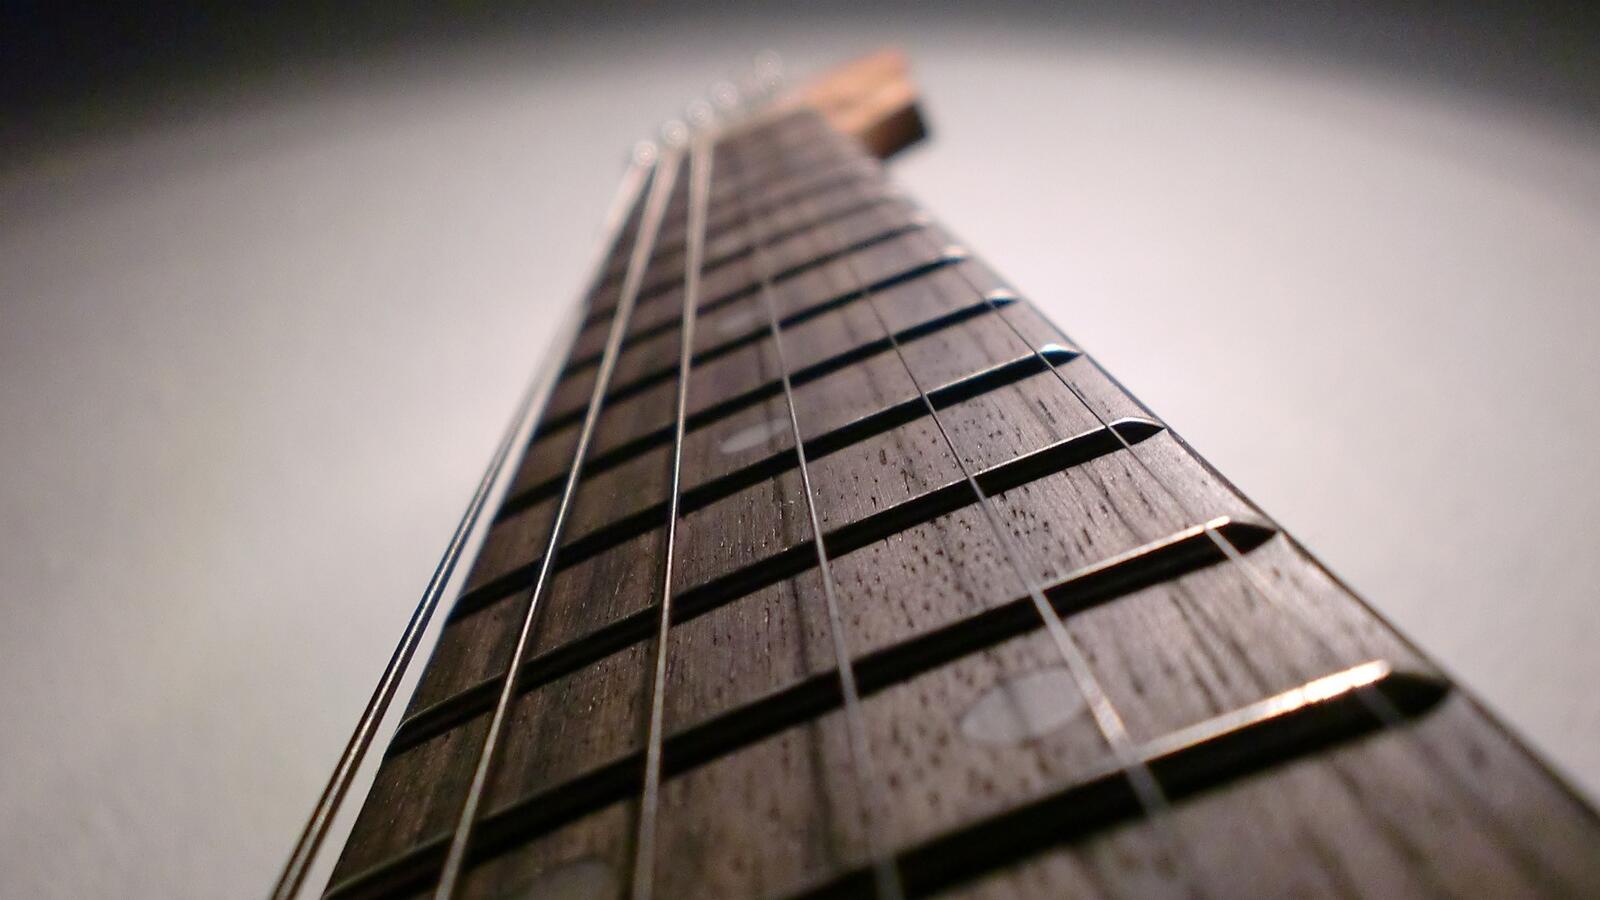 Wallpapers guitar strings musical instrument guitar on the desktop